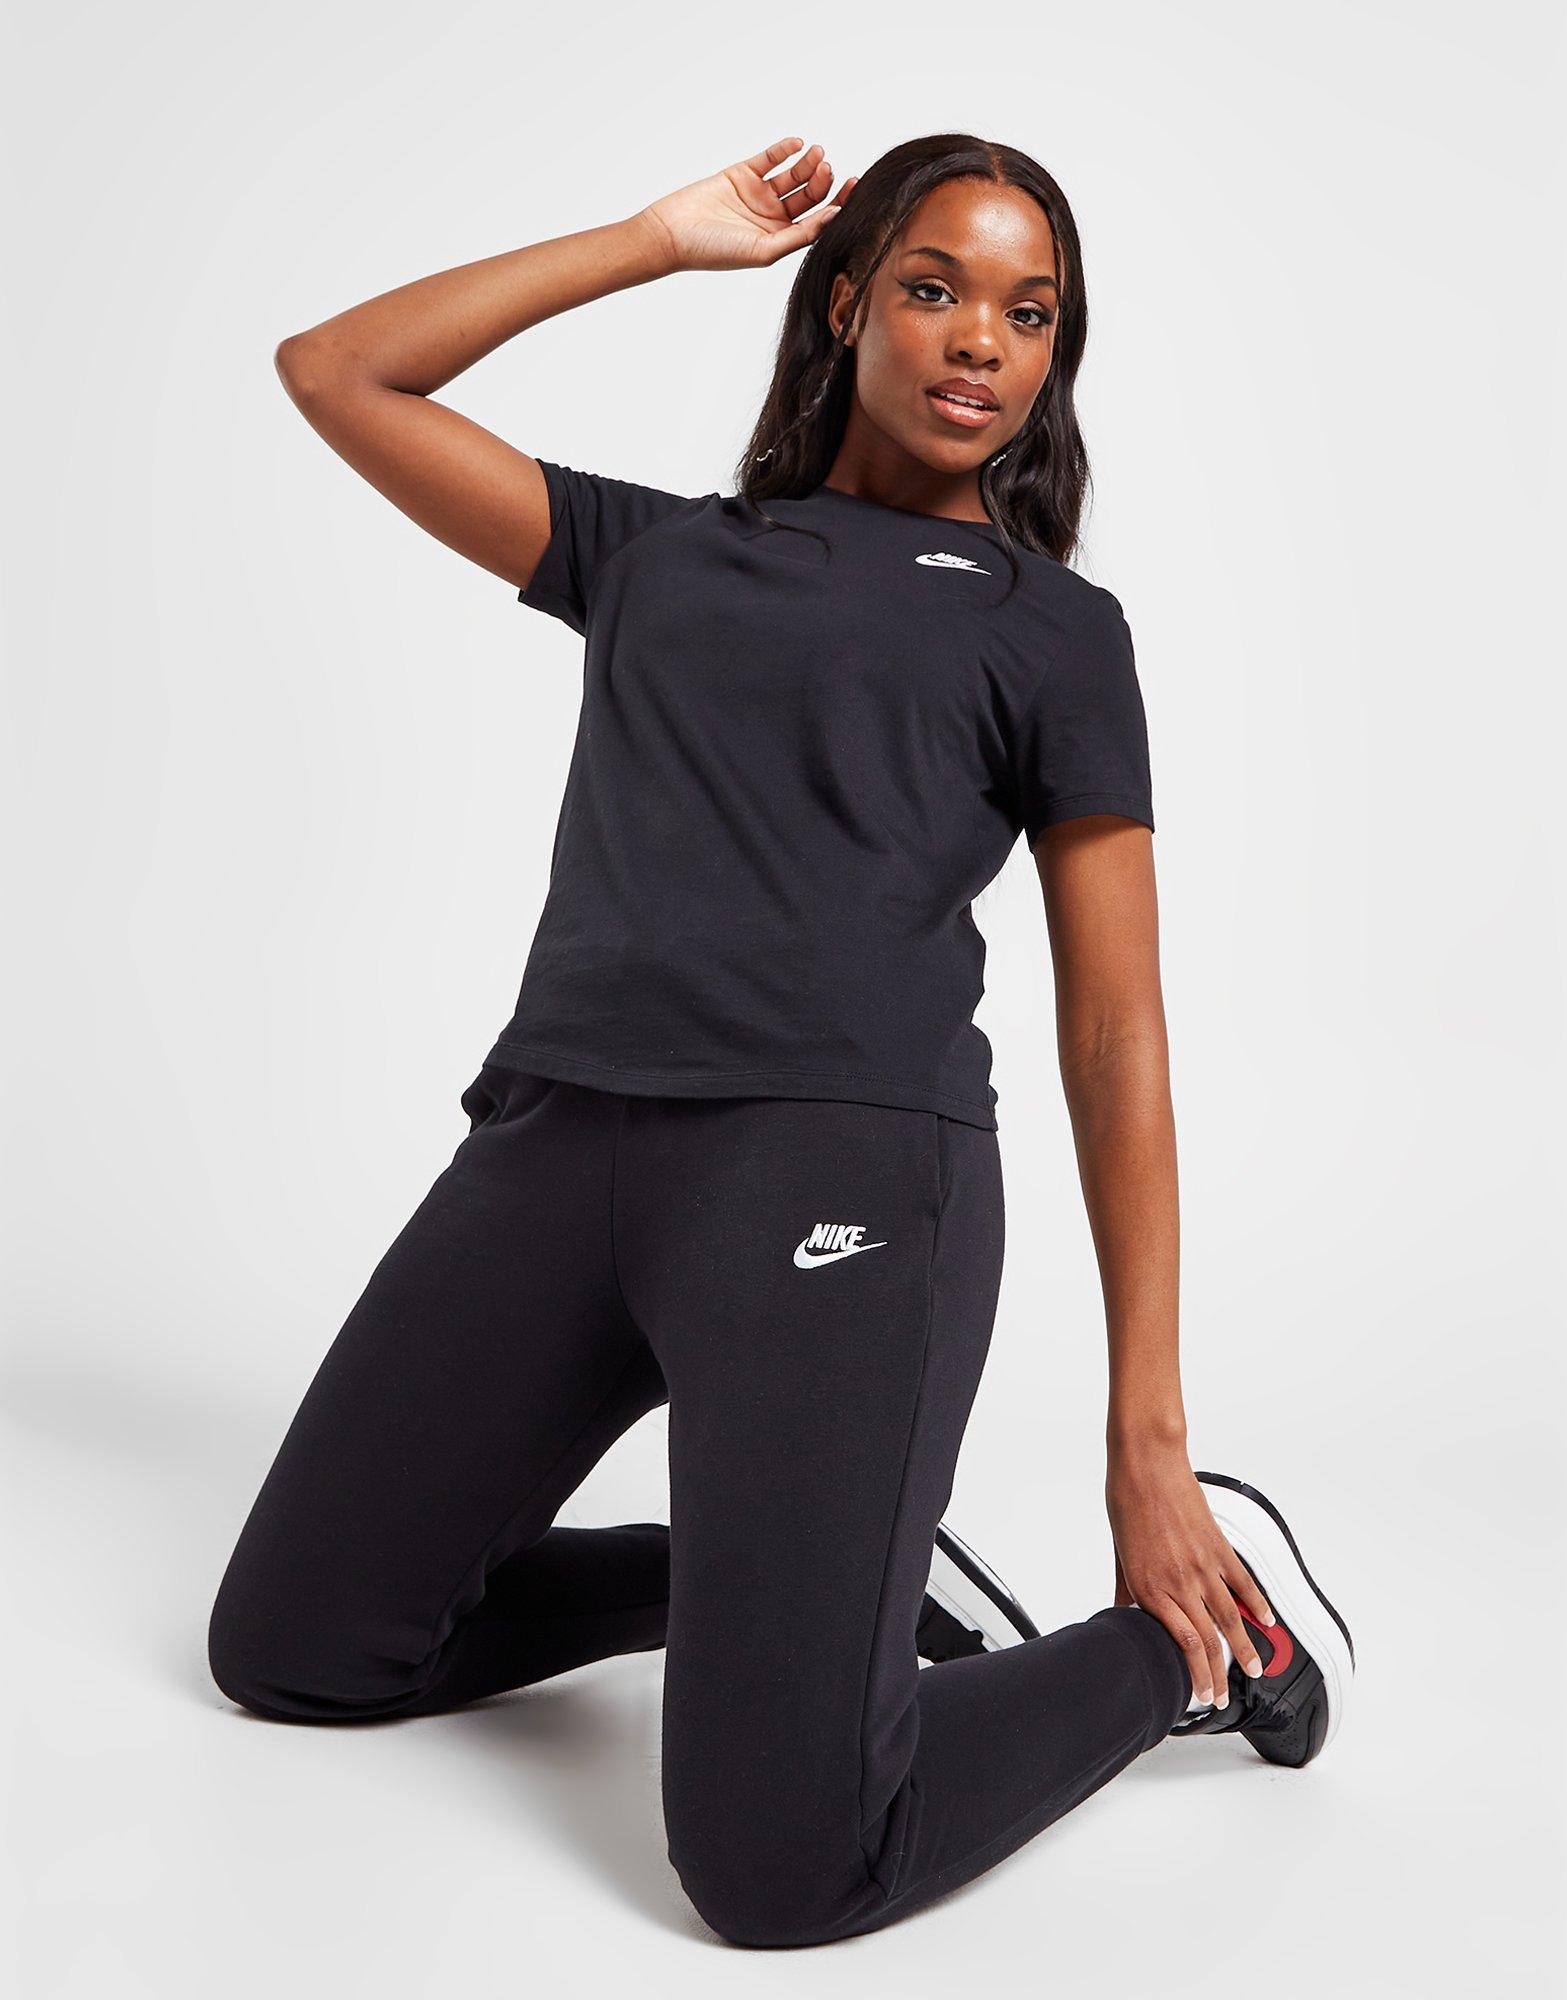 Nike Essential Sweatpants for Women